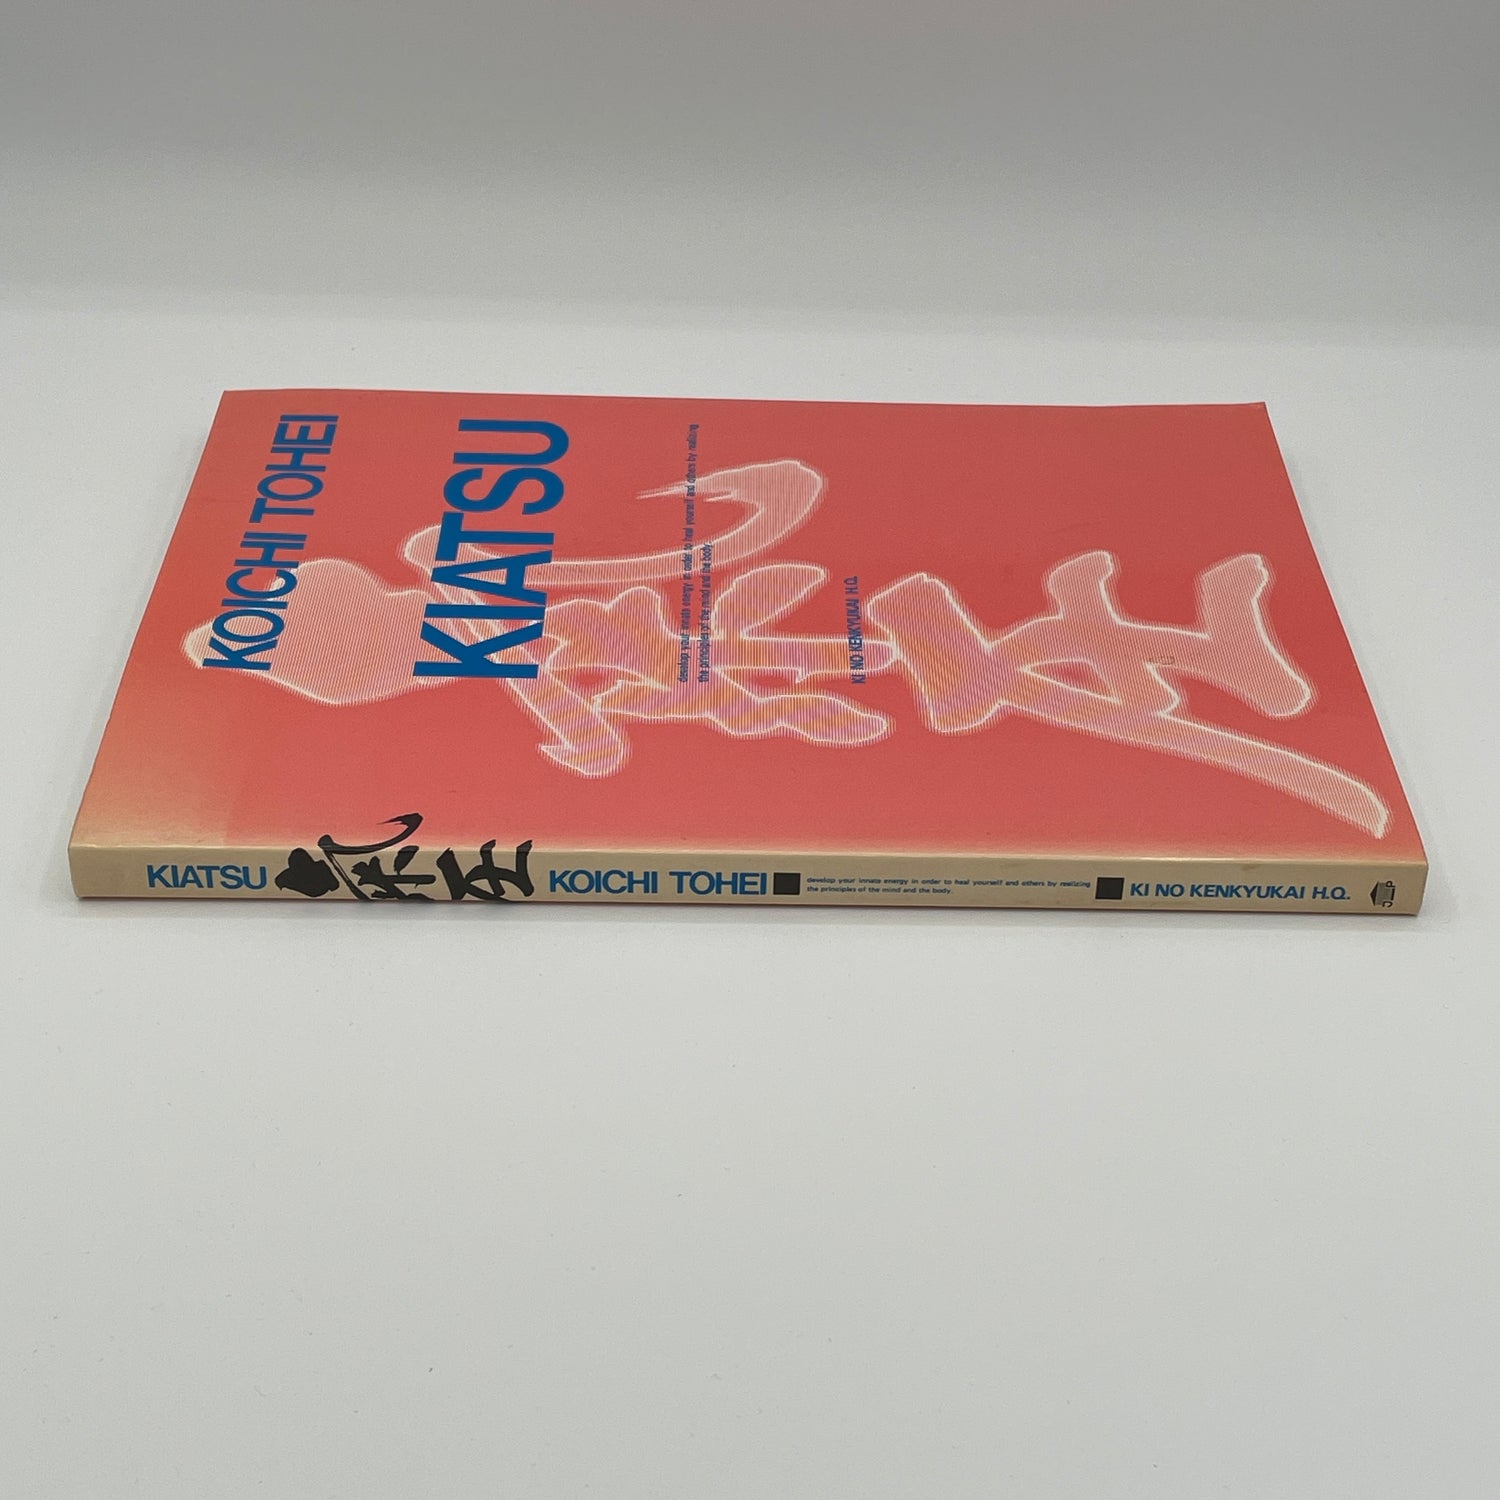 Kiatsu Massage Book By Koichi Tohei (Preowned)